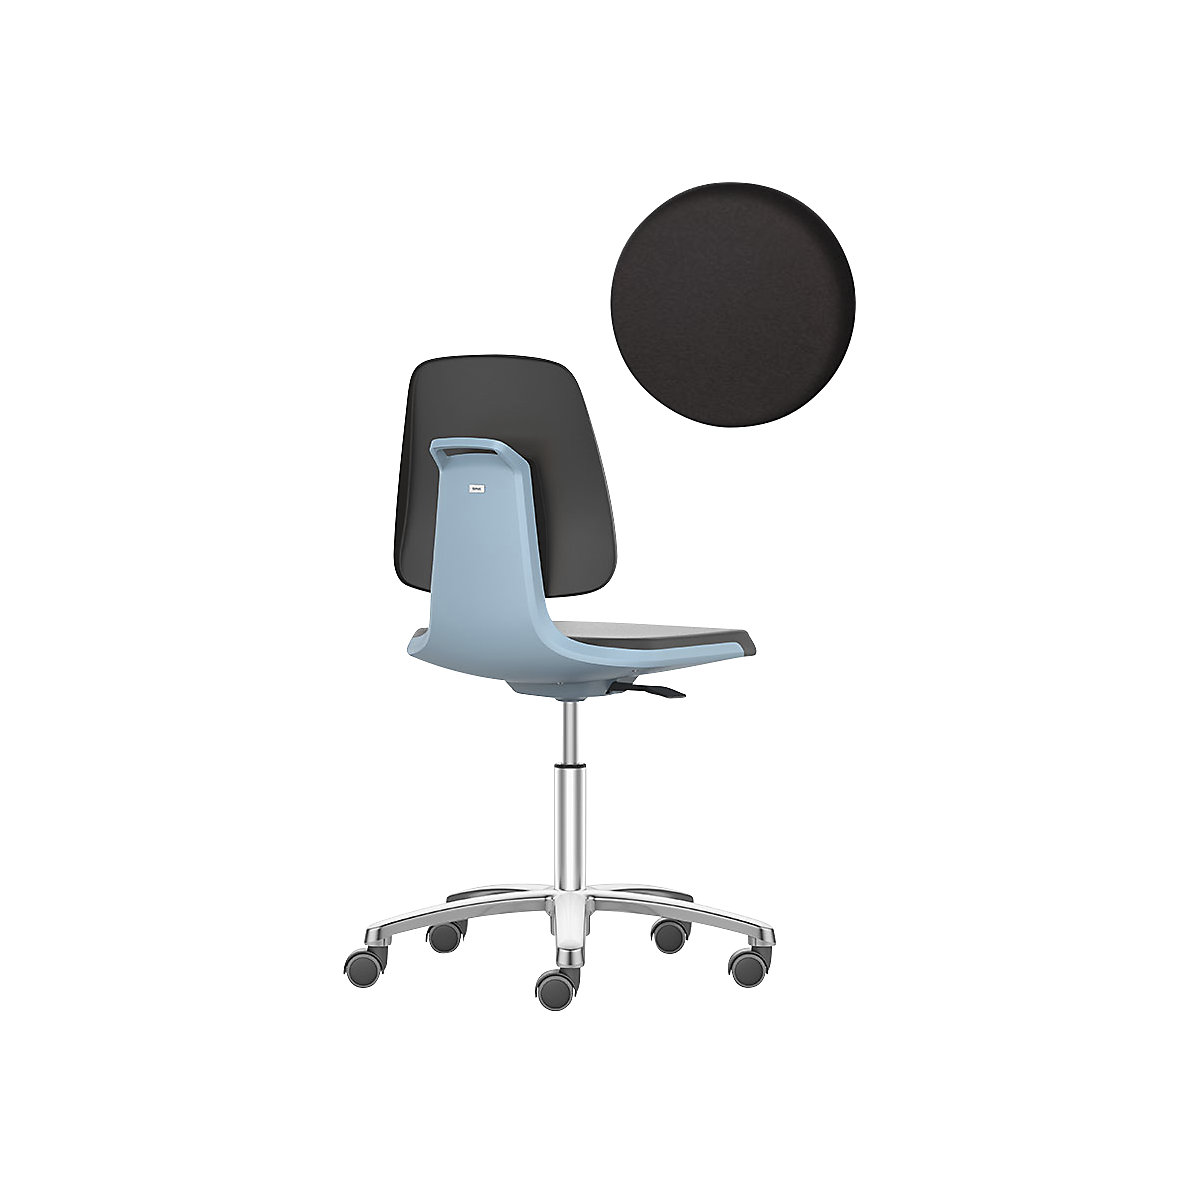 LABSIT industrial swivel chair – bimos, five-star base with castors, PU foam seat, blue-25